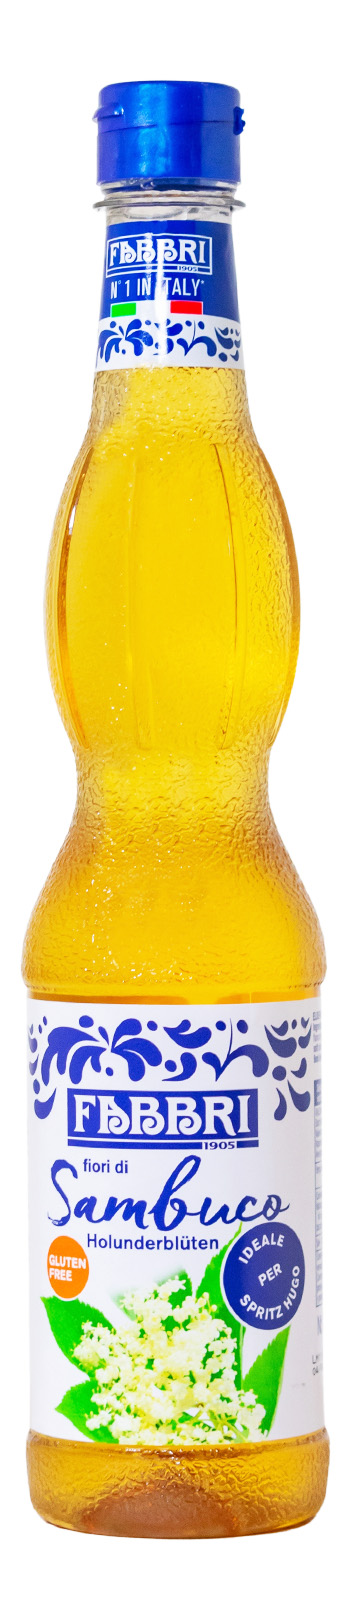 Fabbri Holunder Sirup PET-Flasche - 0,56L